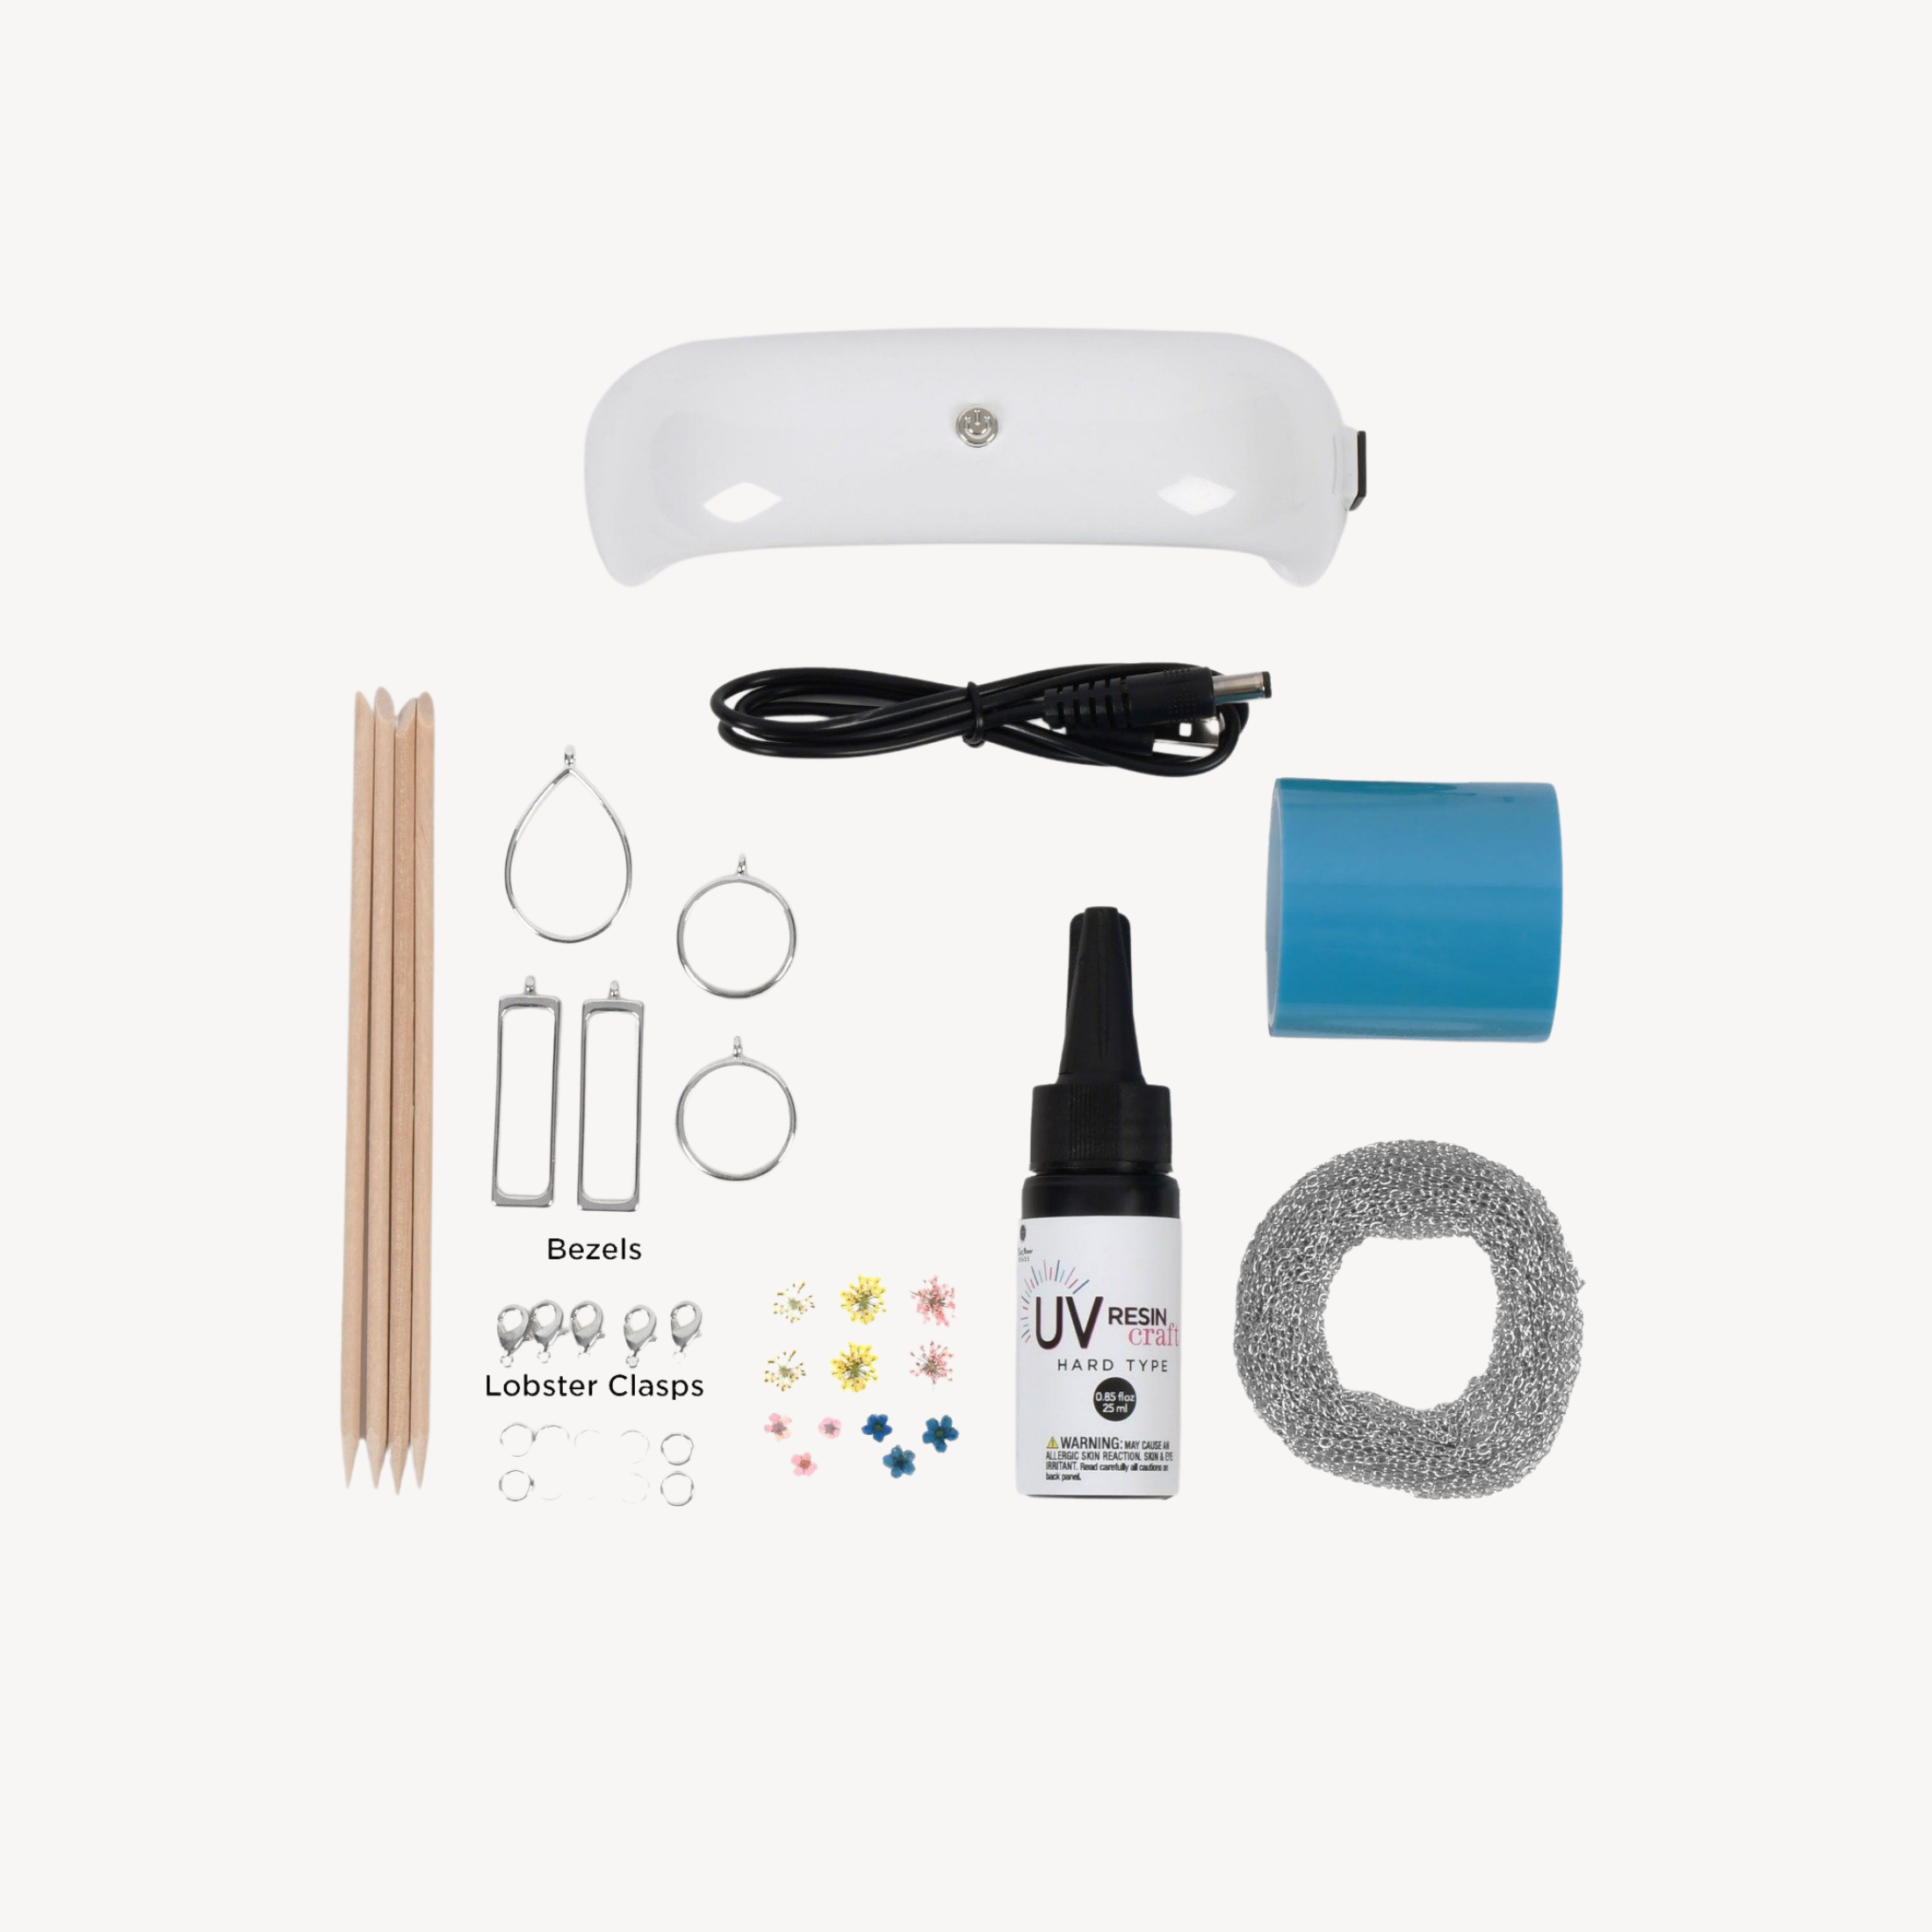 Blue Moon Studio™ UV Resin Craft White Curing USB Lamp